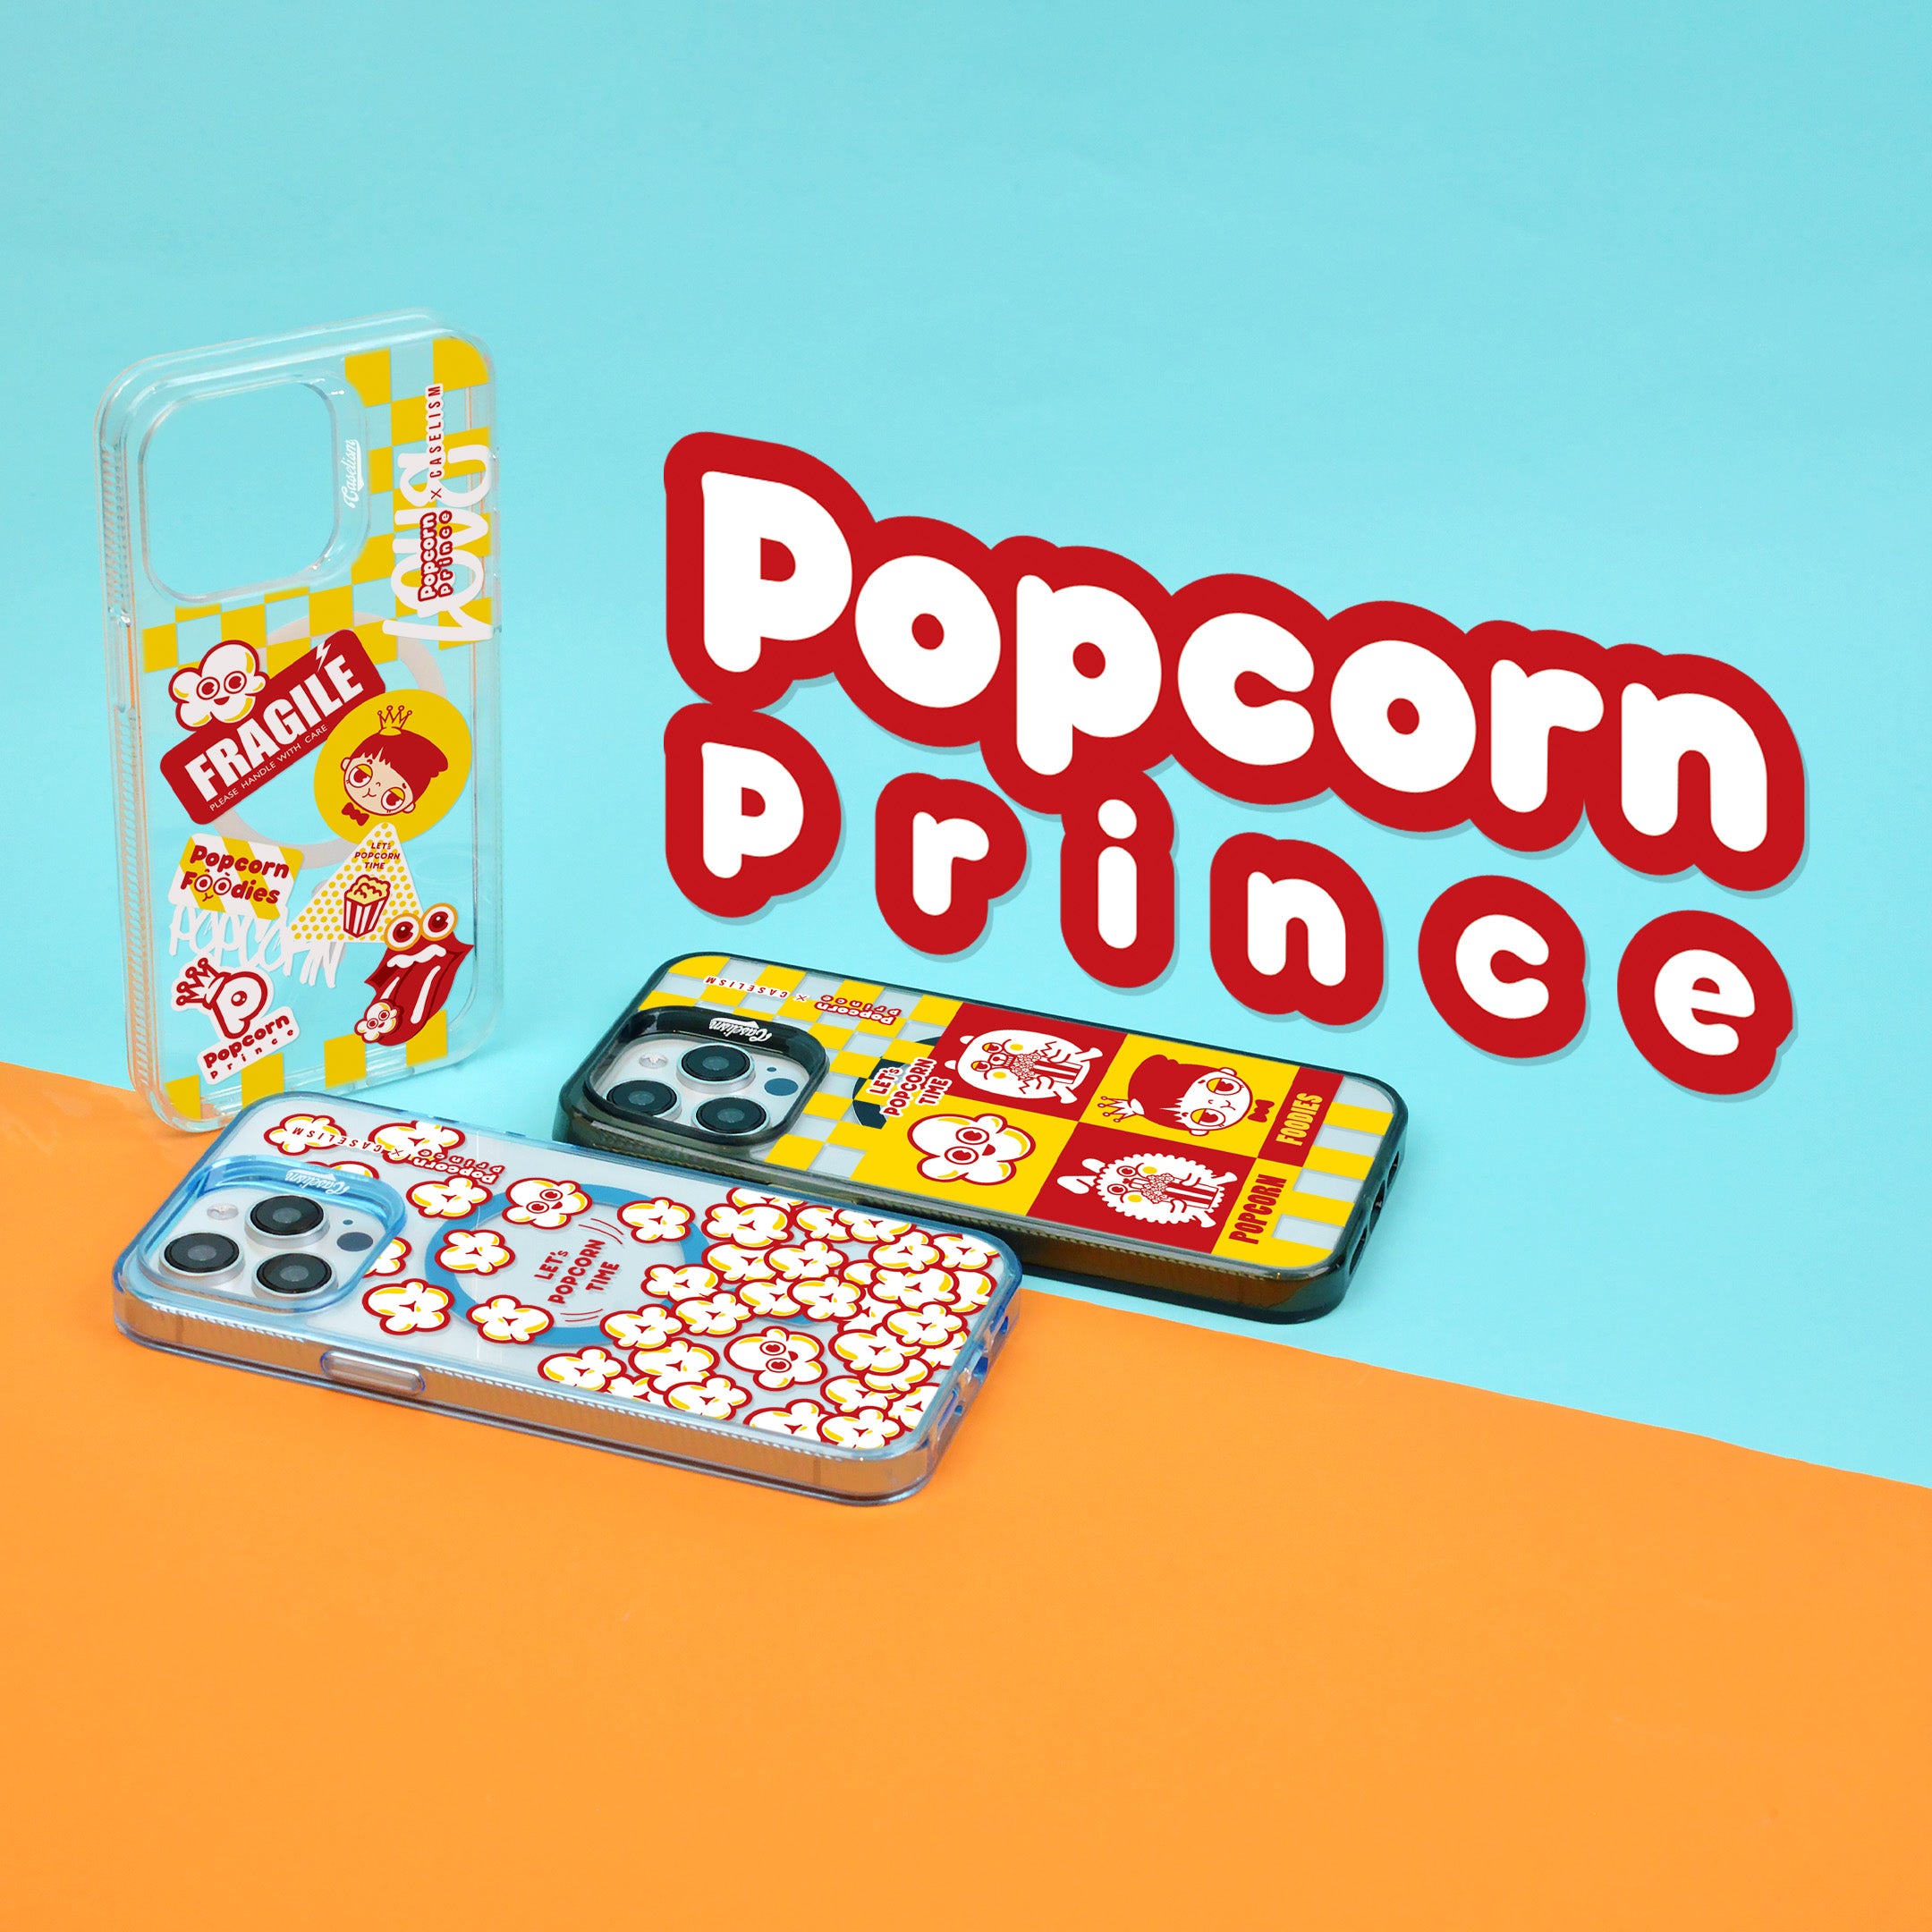 Caselism popcorn prince